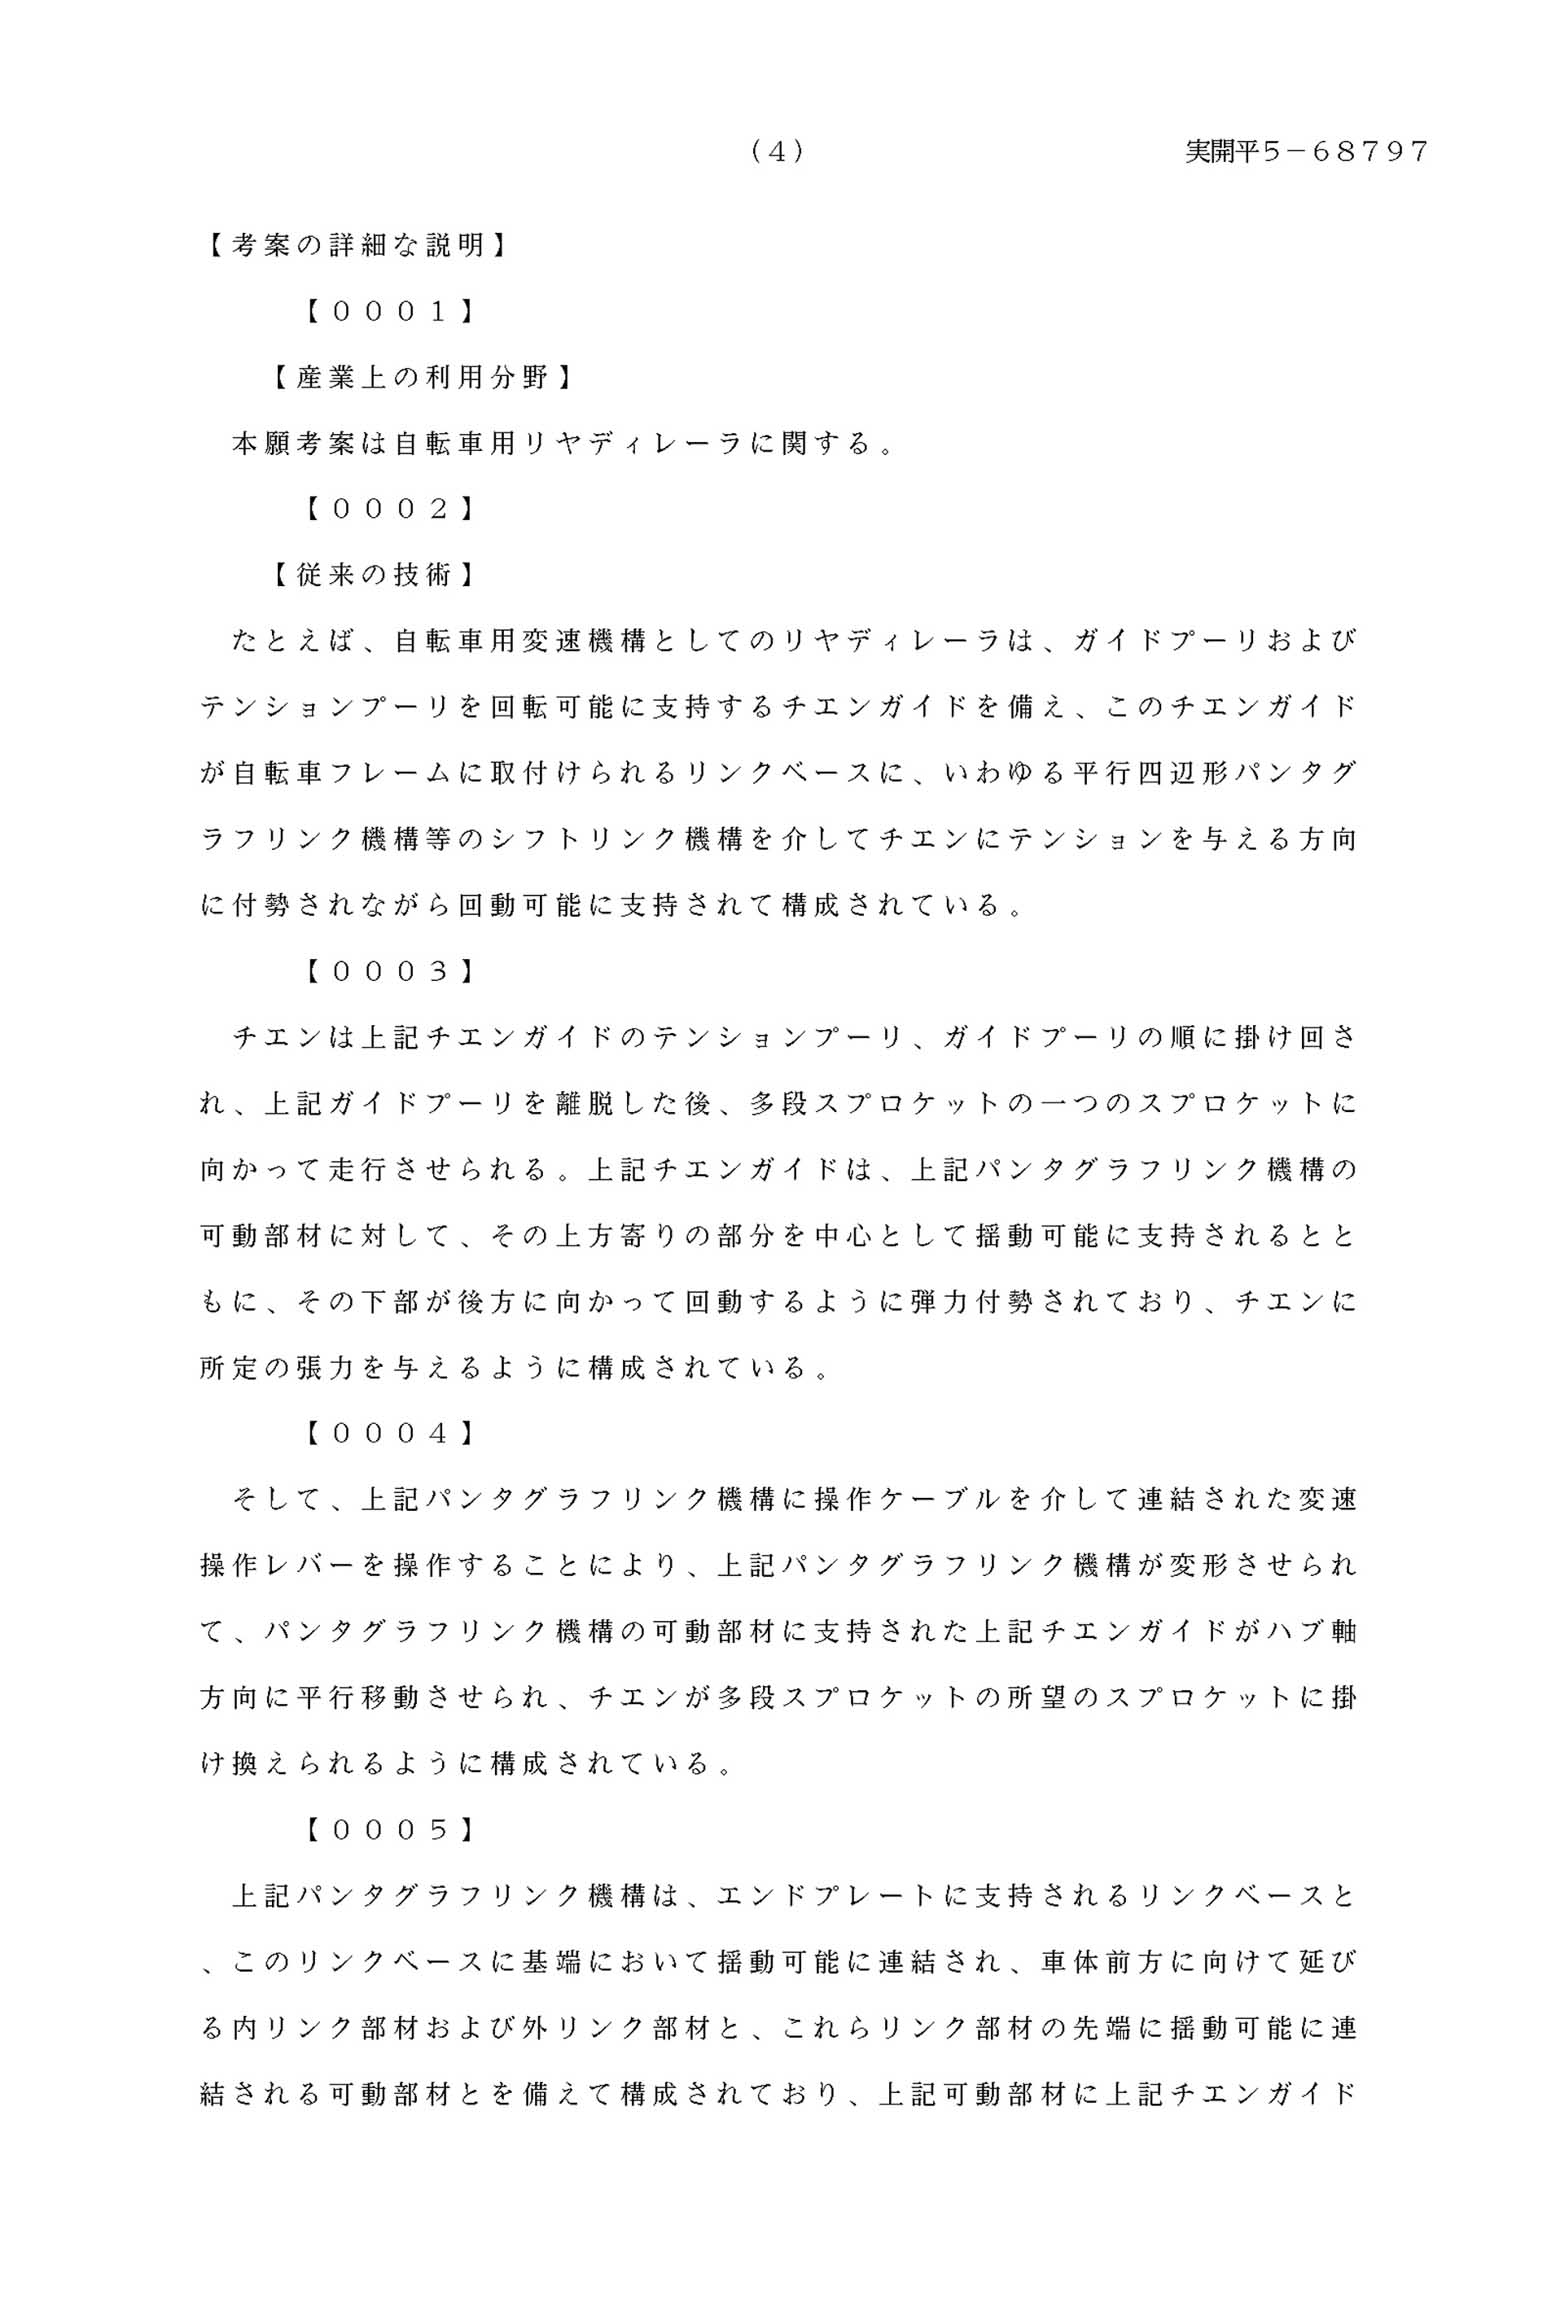 Japanese Patent H5-68797 scan 4 main image